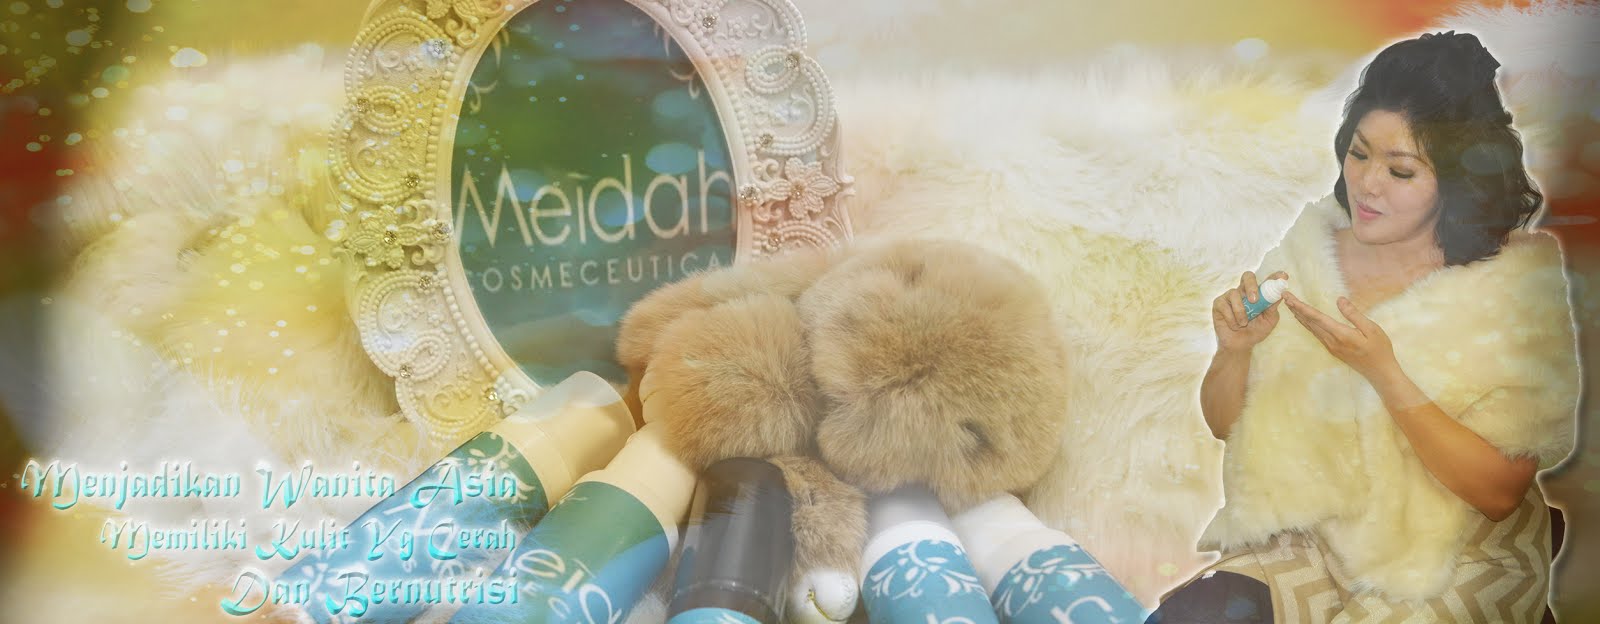 Meidah Cosmeceutical